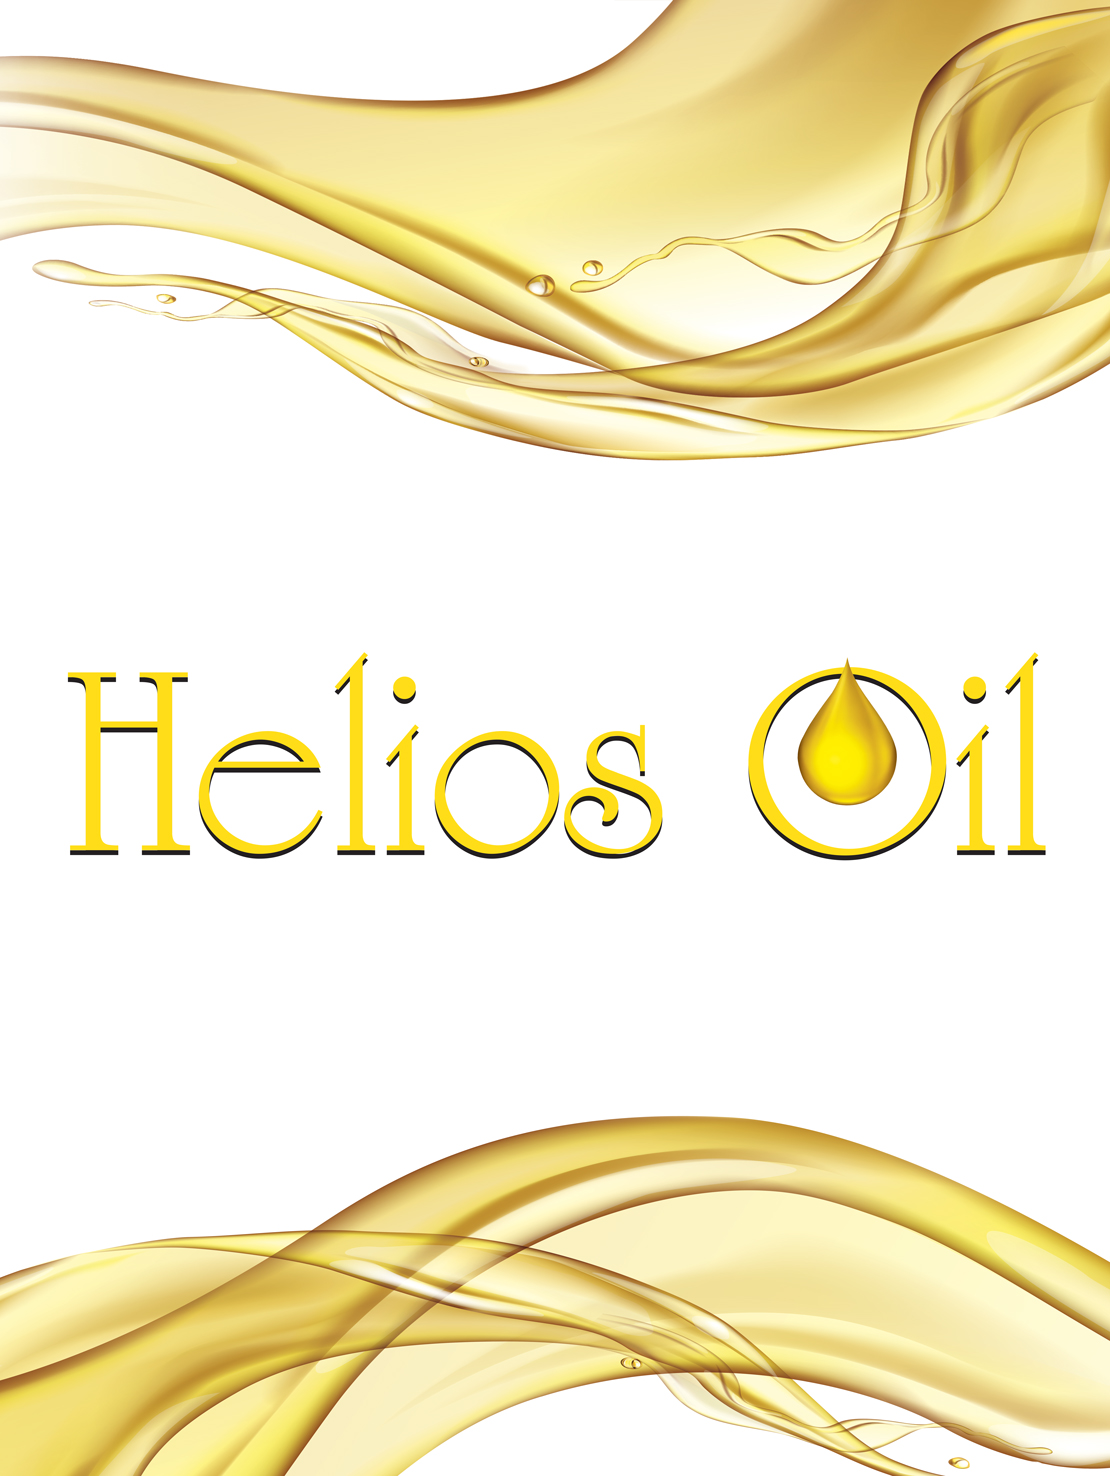 Helios Oil Ltd